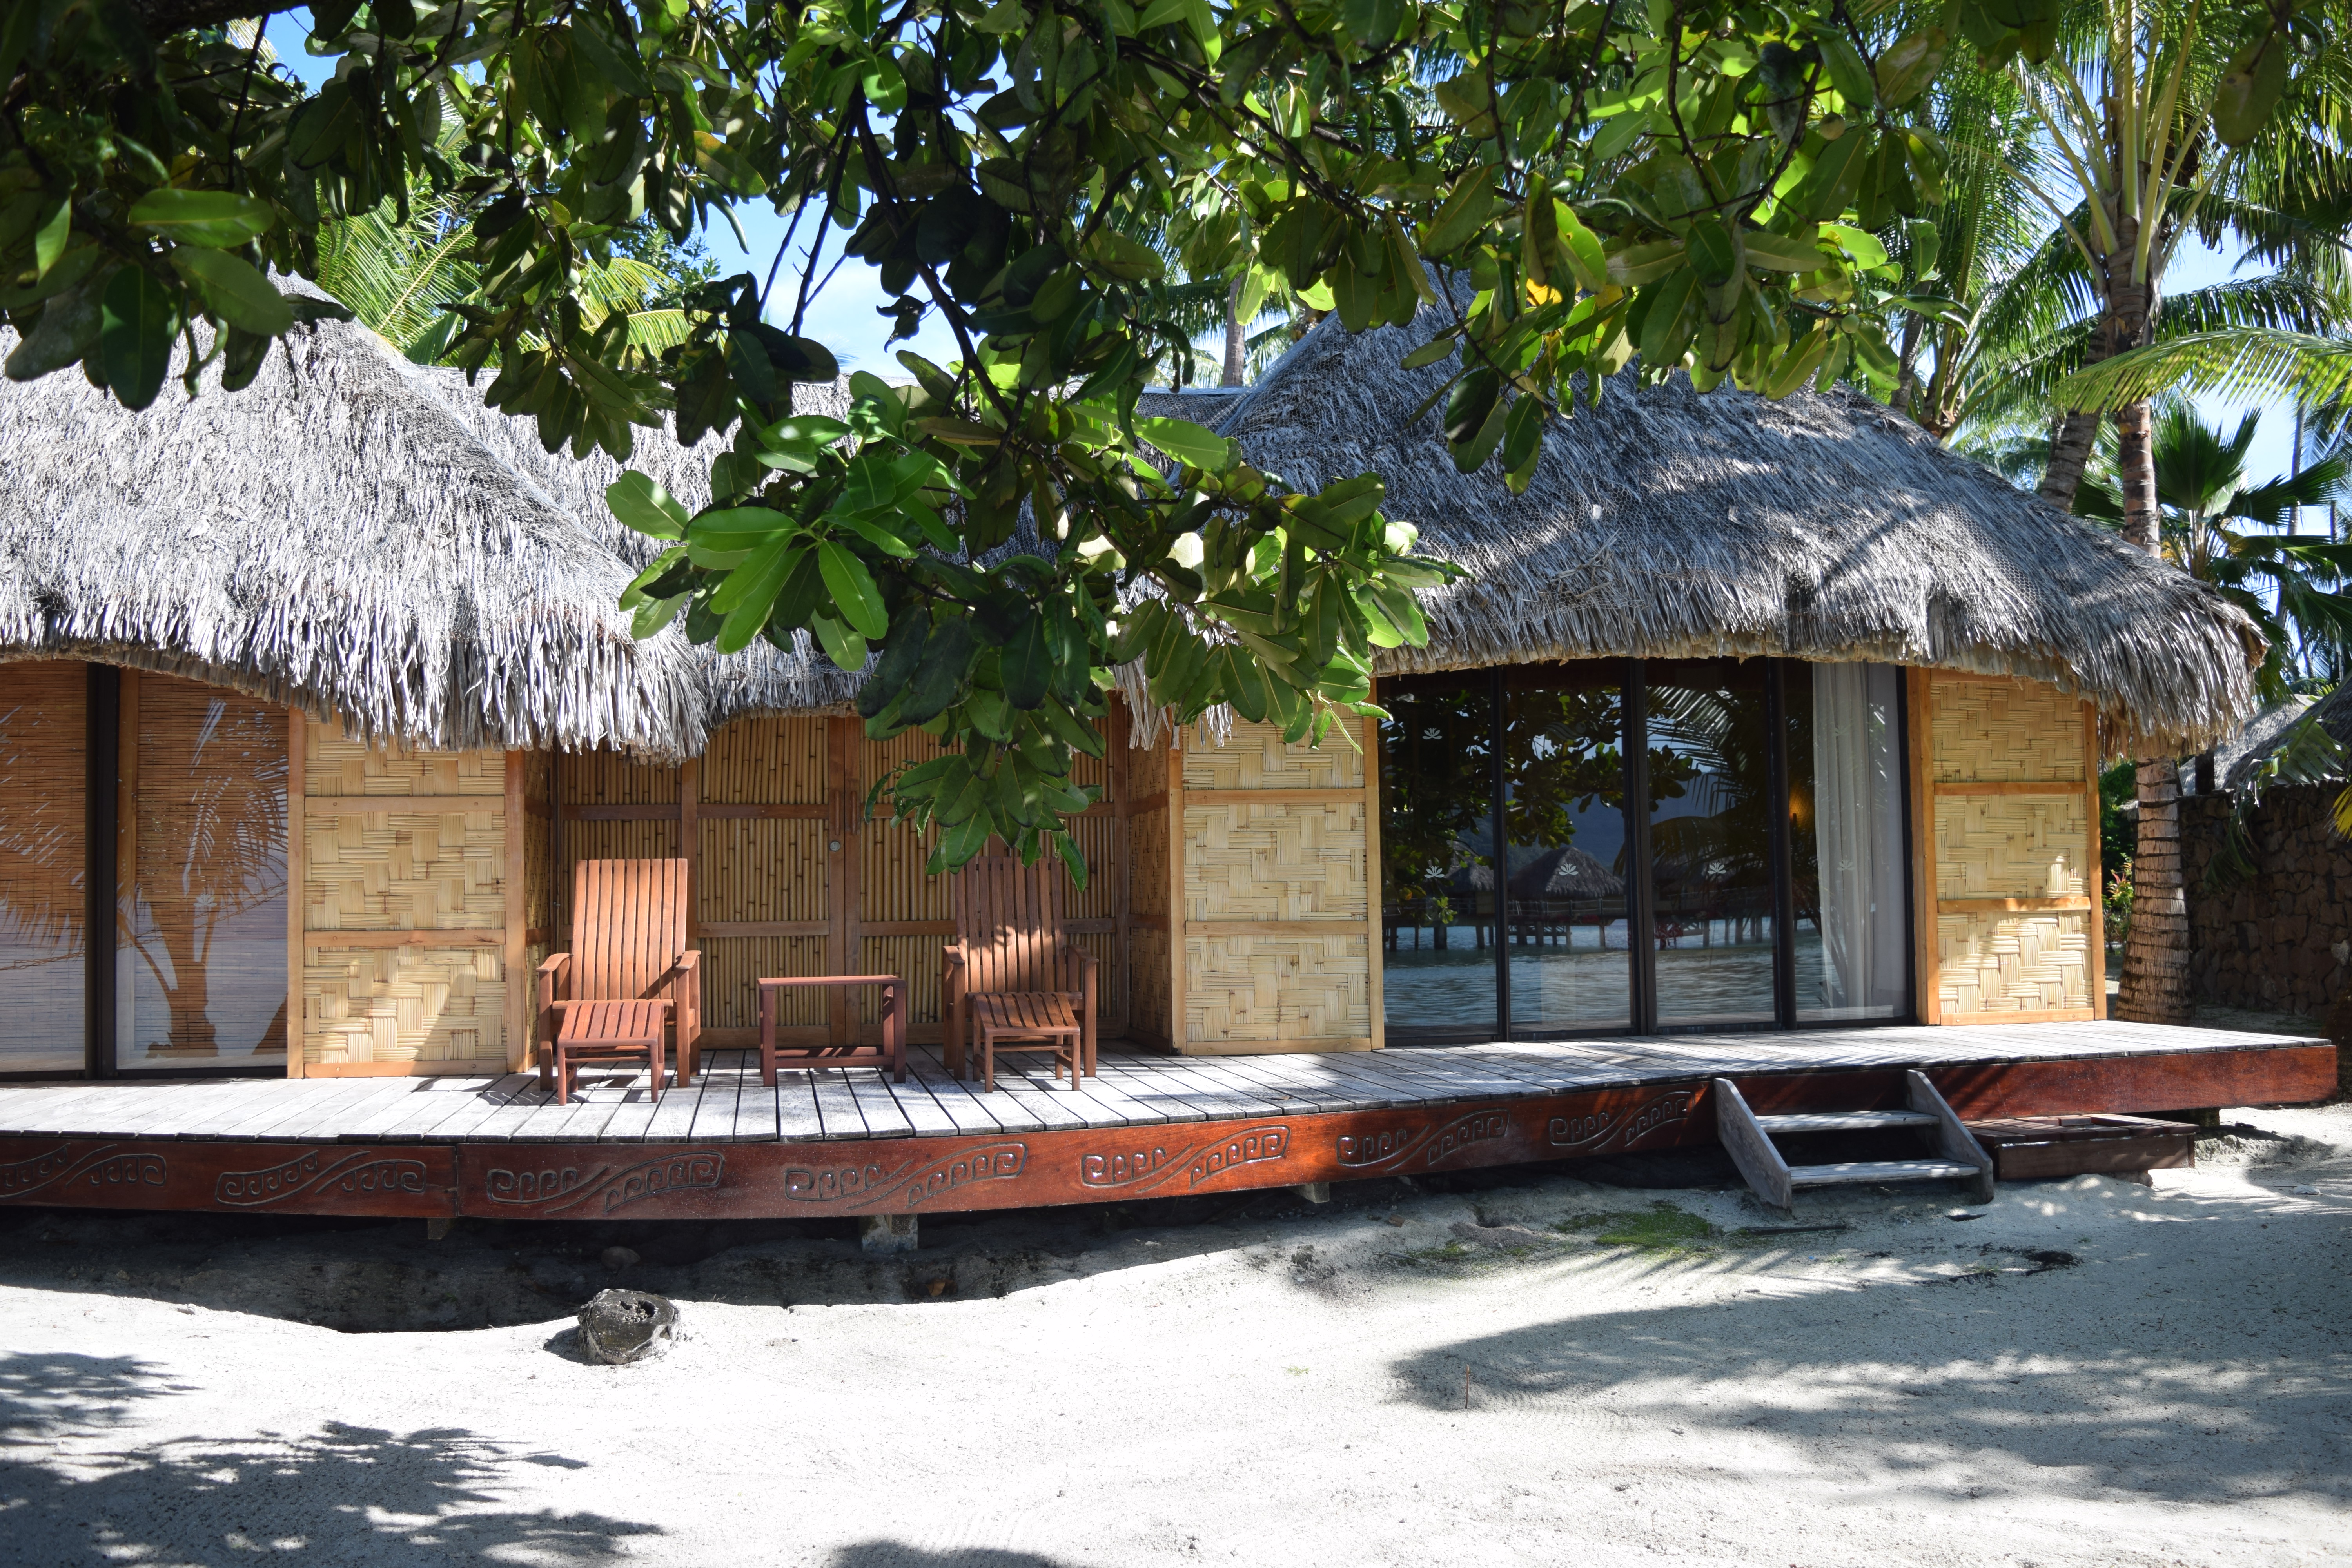 3 Days In Taha'a, Tahiti Trip 2018 - Tahiti Overwater Bungalow - Tahiti Itinerary - Best Places To Stay Tahiti - Tahaa - French Polynesia Vacation - Communikait by Kait Hanson